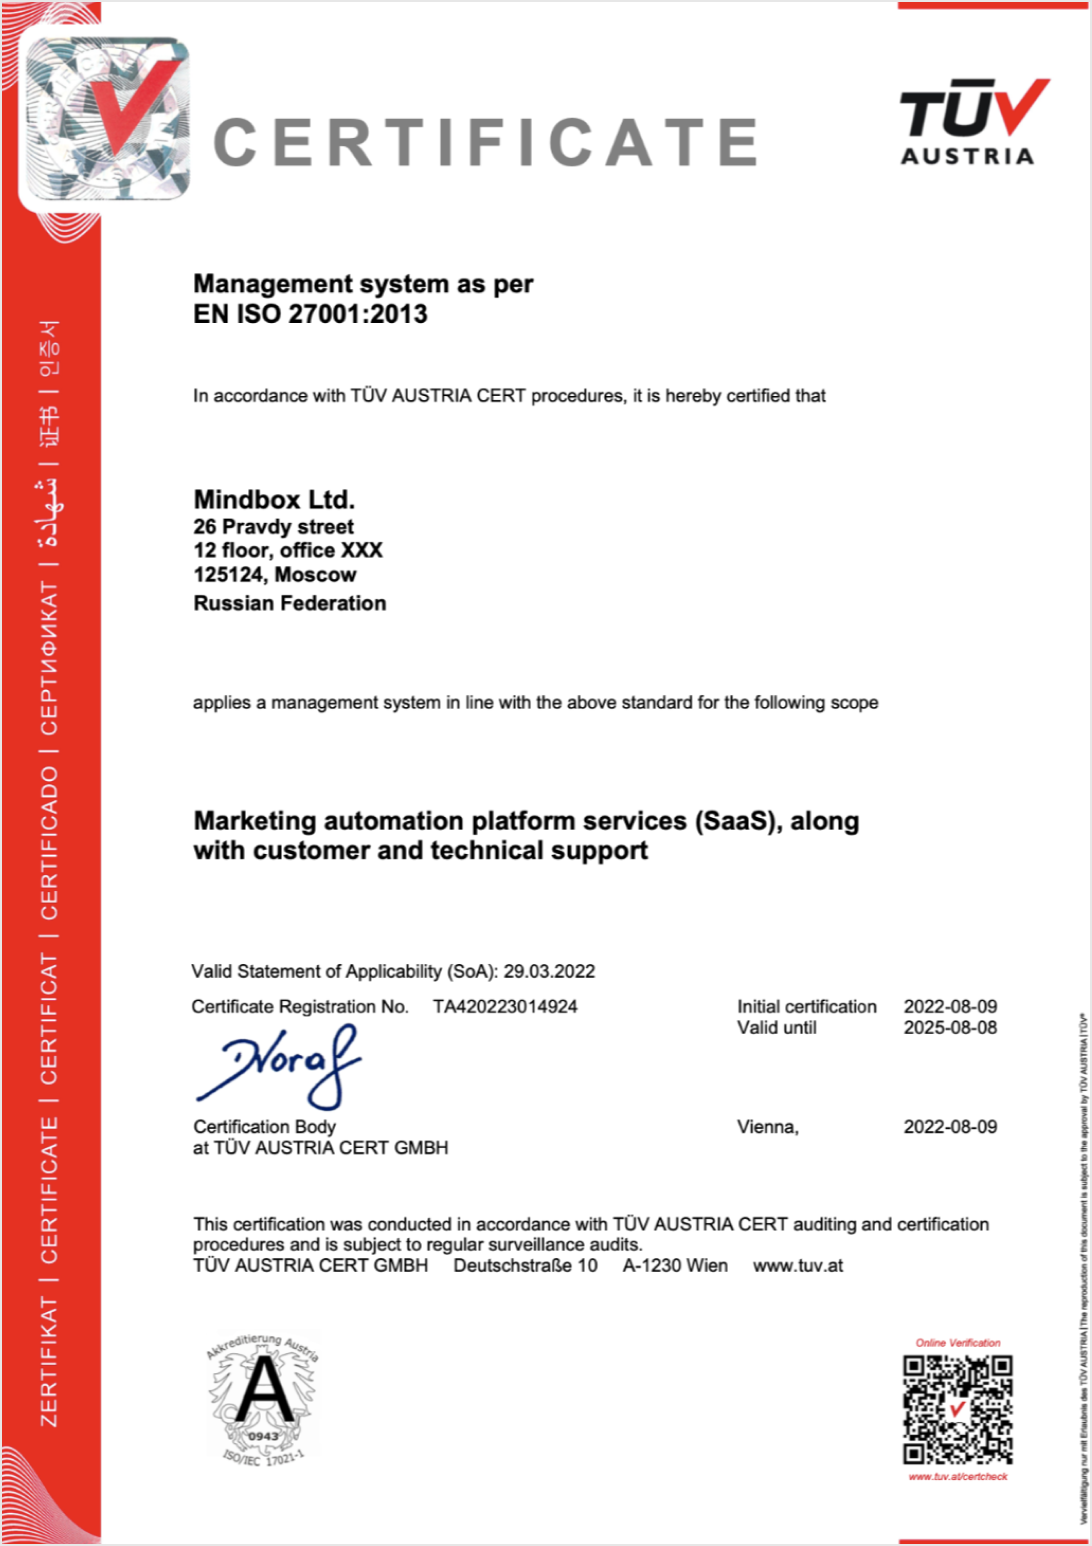 Сертификат о соответствии международному стандарту безопасности ISO 27001